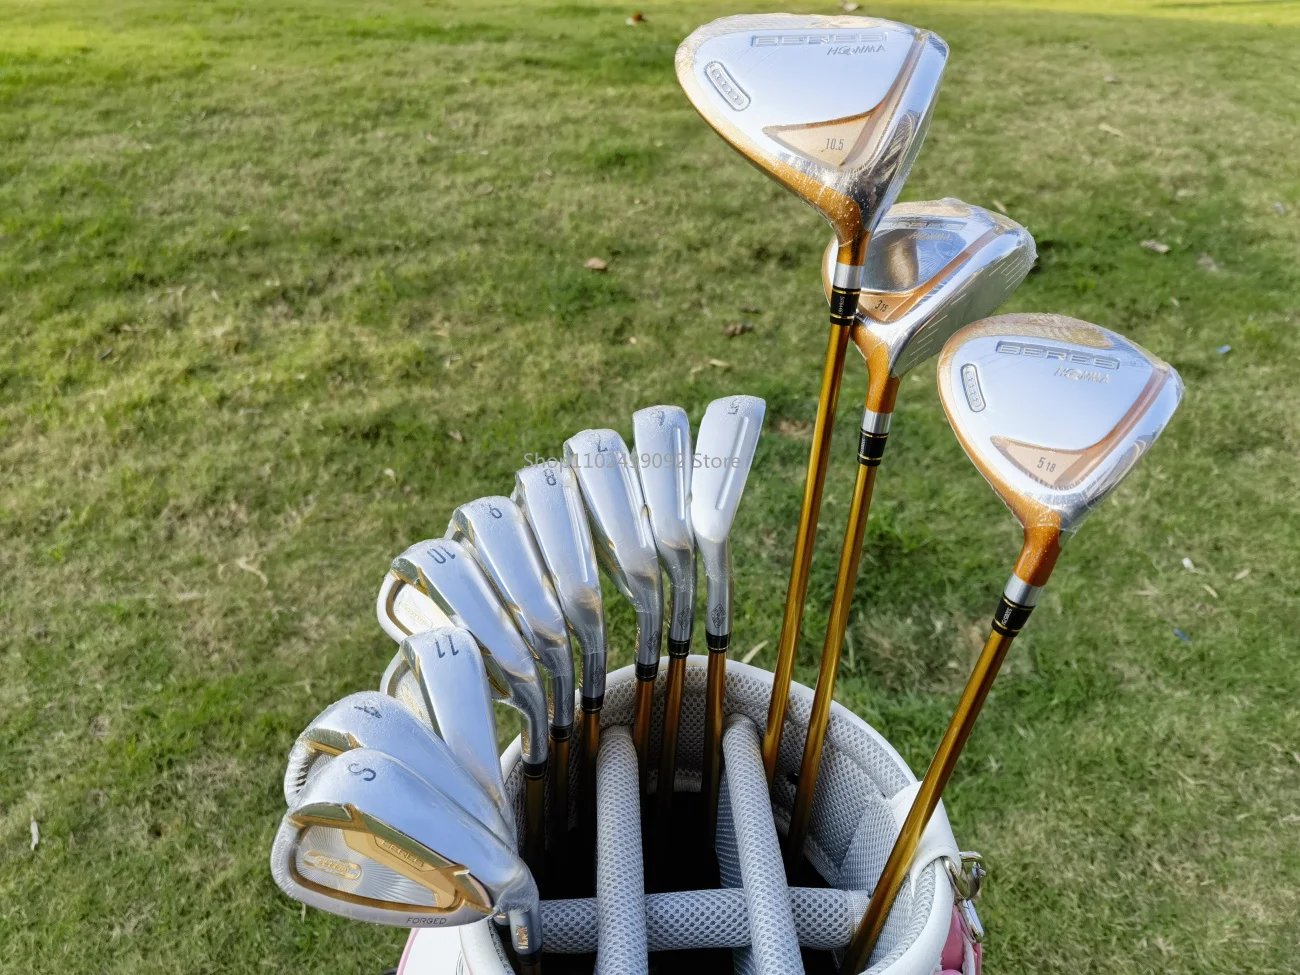 

New Honma Beres 07 4 stars Complete Set Golf Full Set Golf Clubs Driver Fairway Woods Irons Putter Graphite Shaft